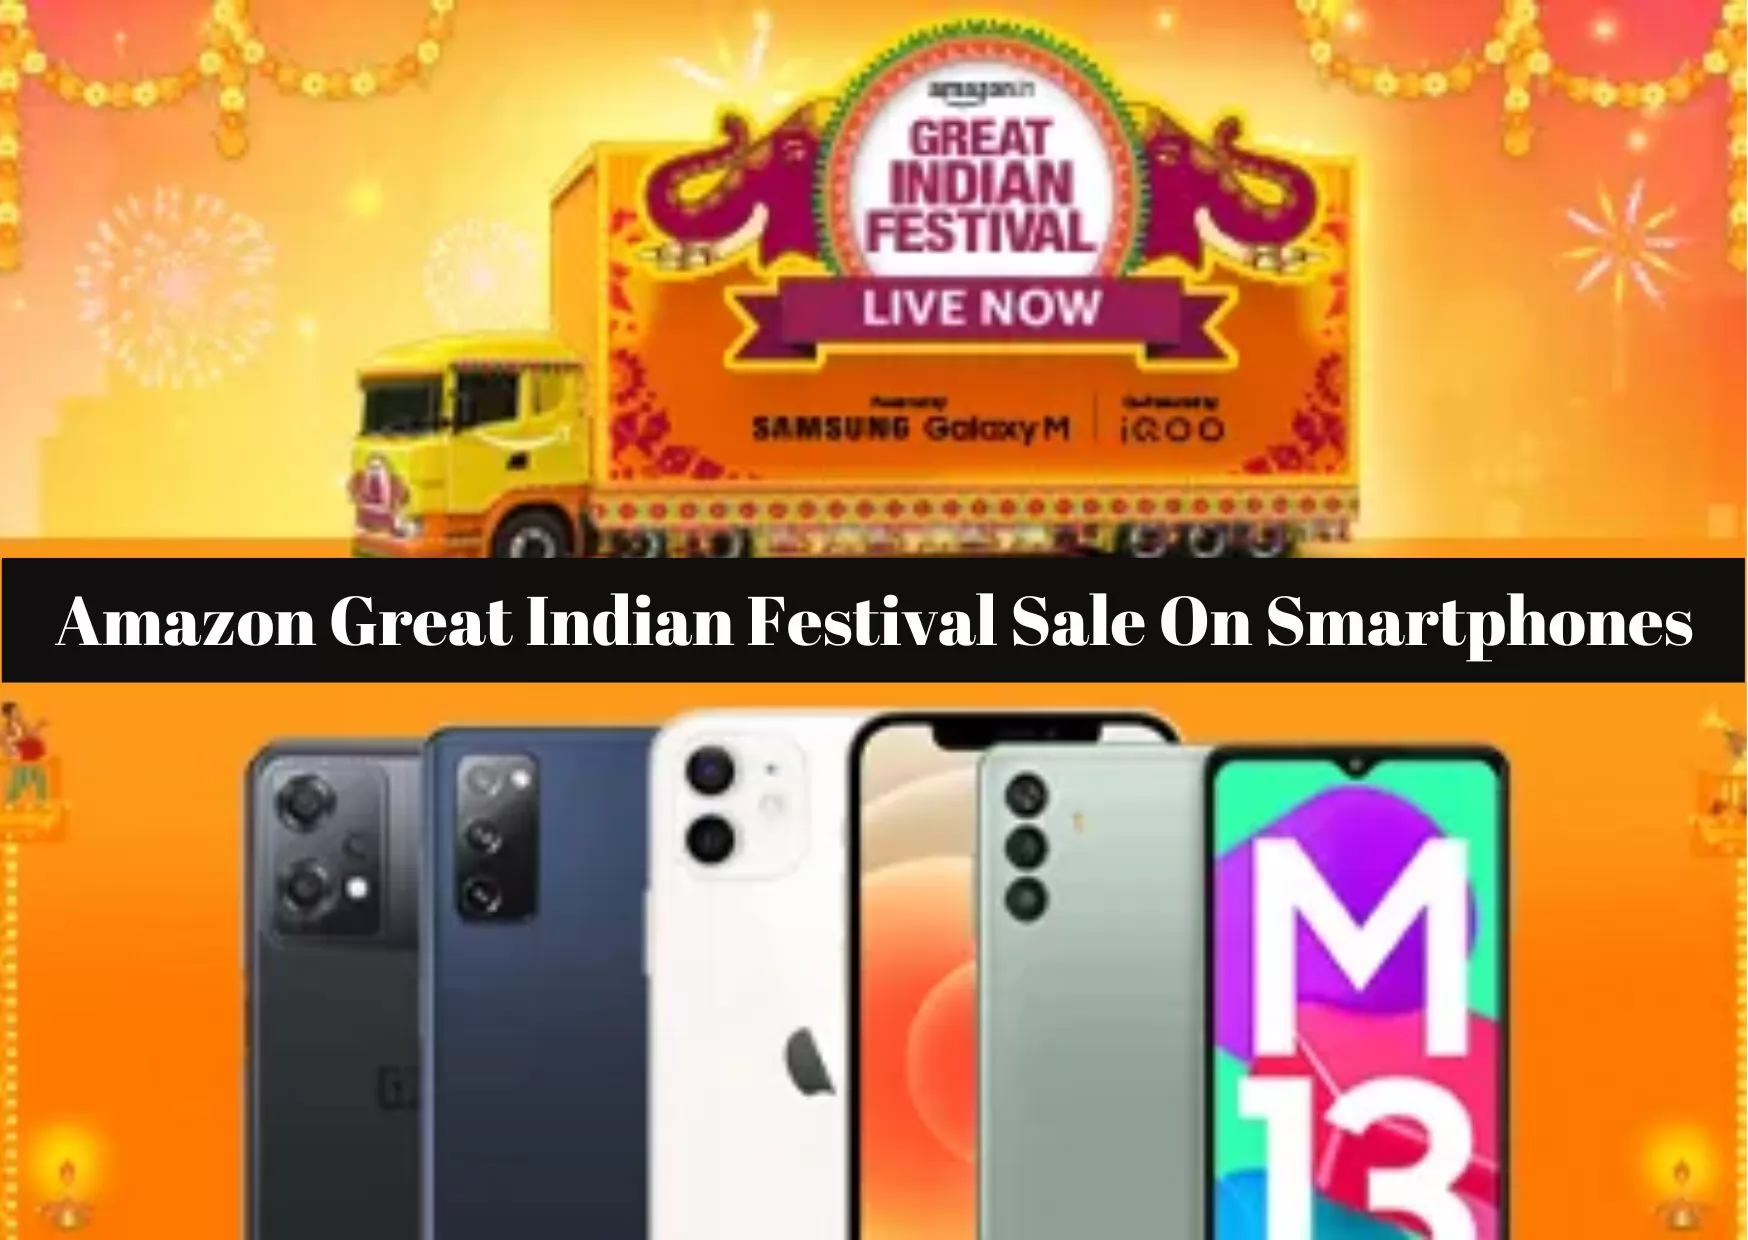 Amazon Great Indian Festival Sale on Smartphones